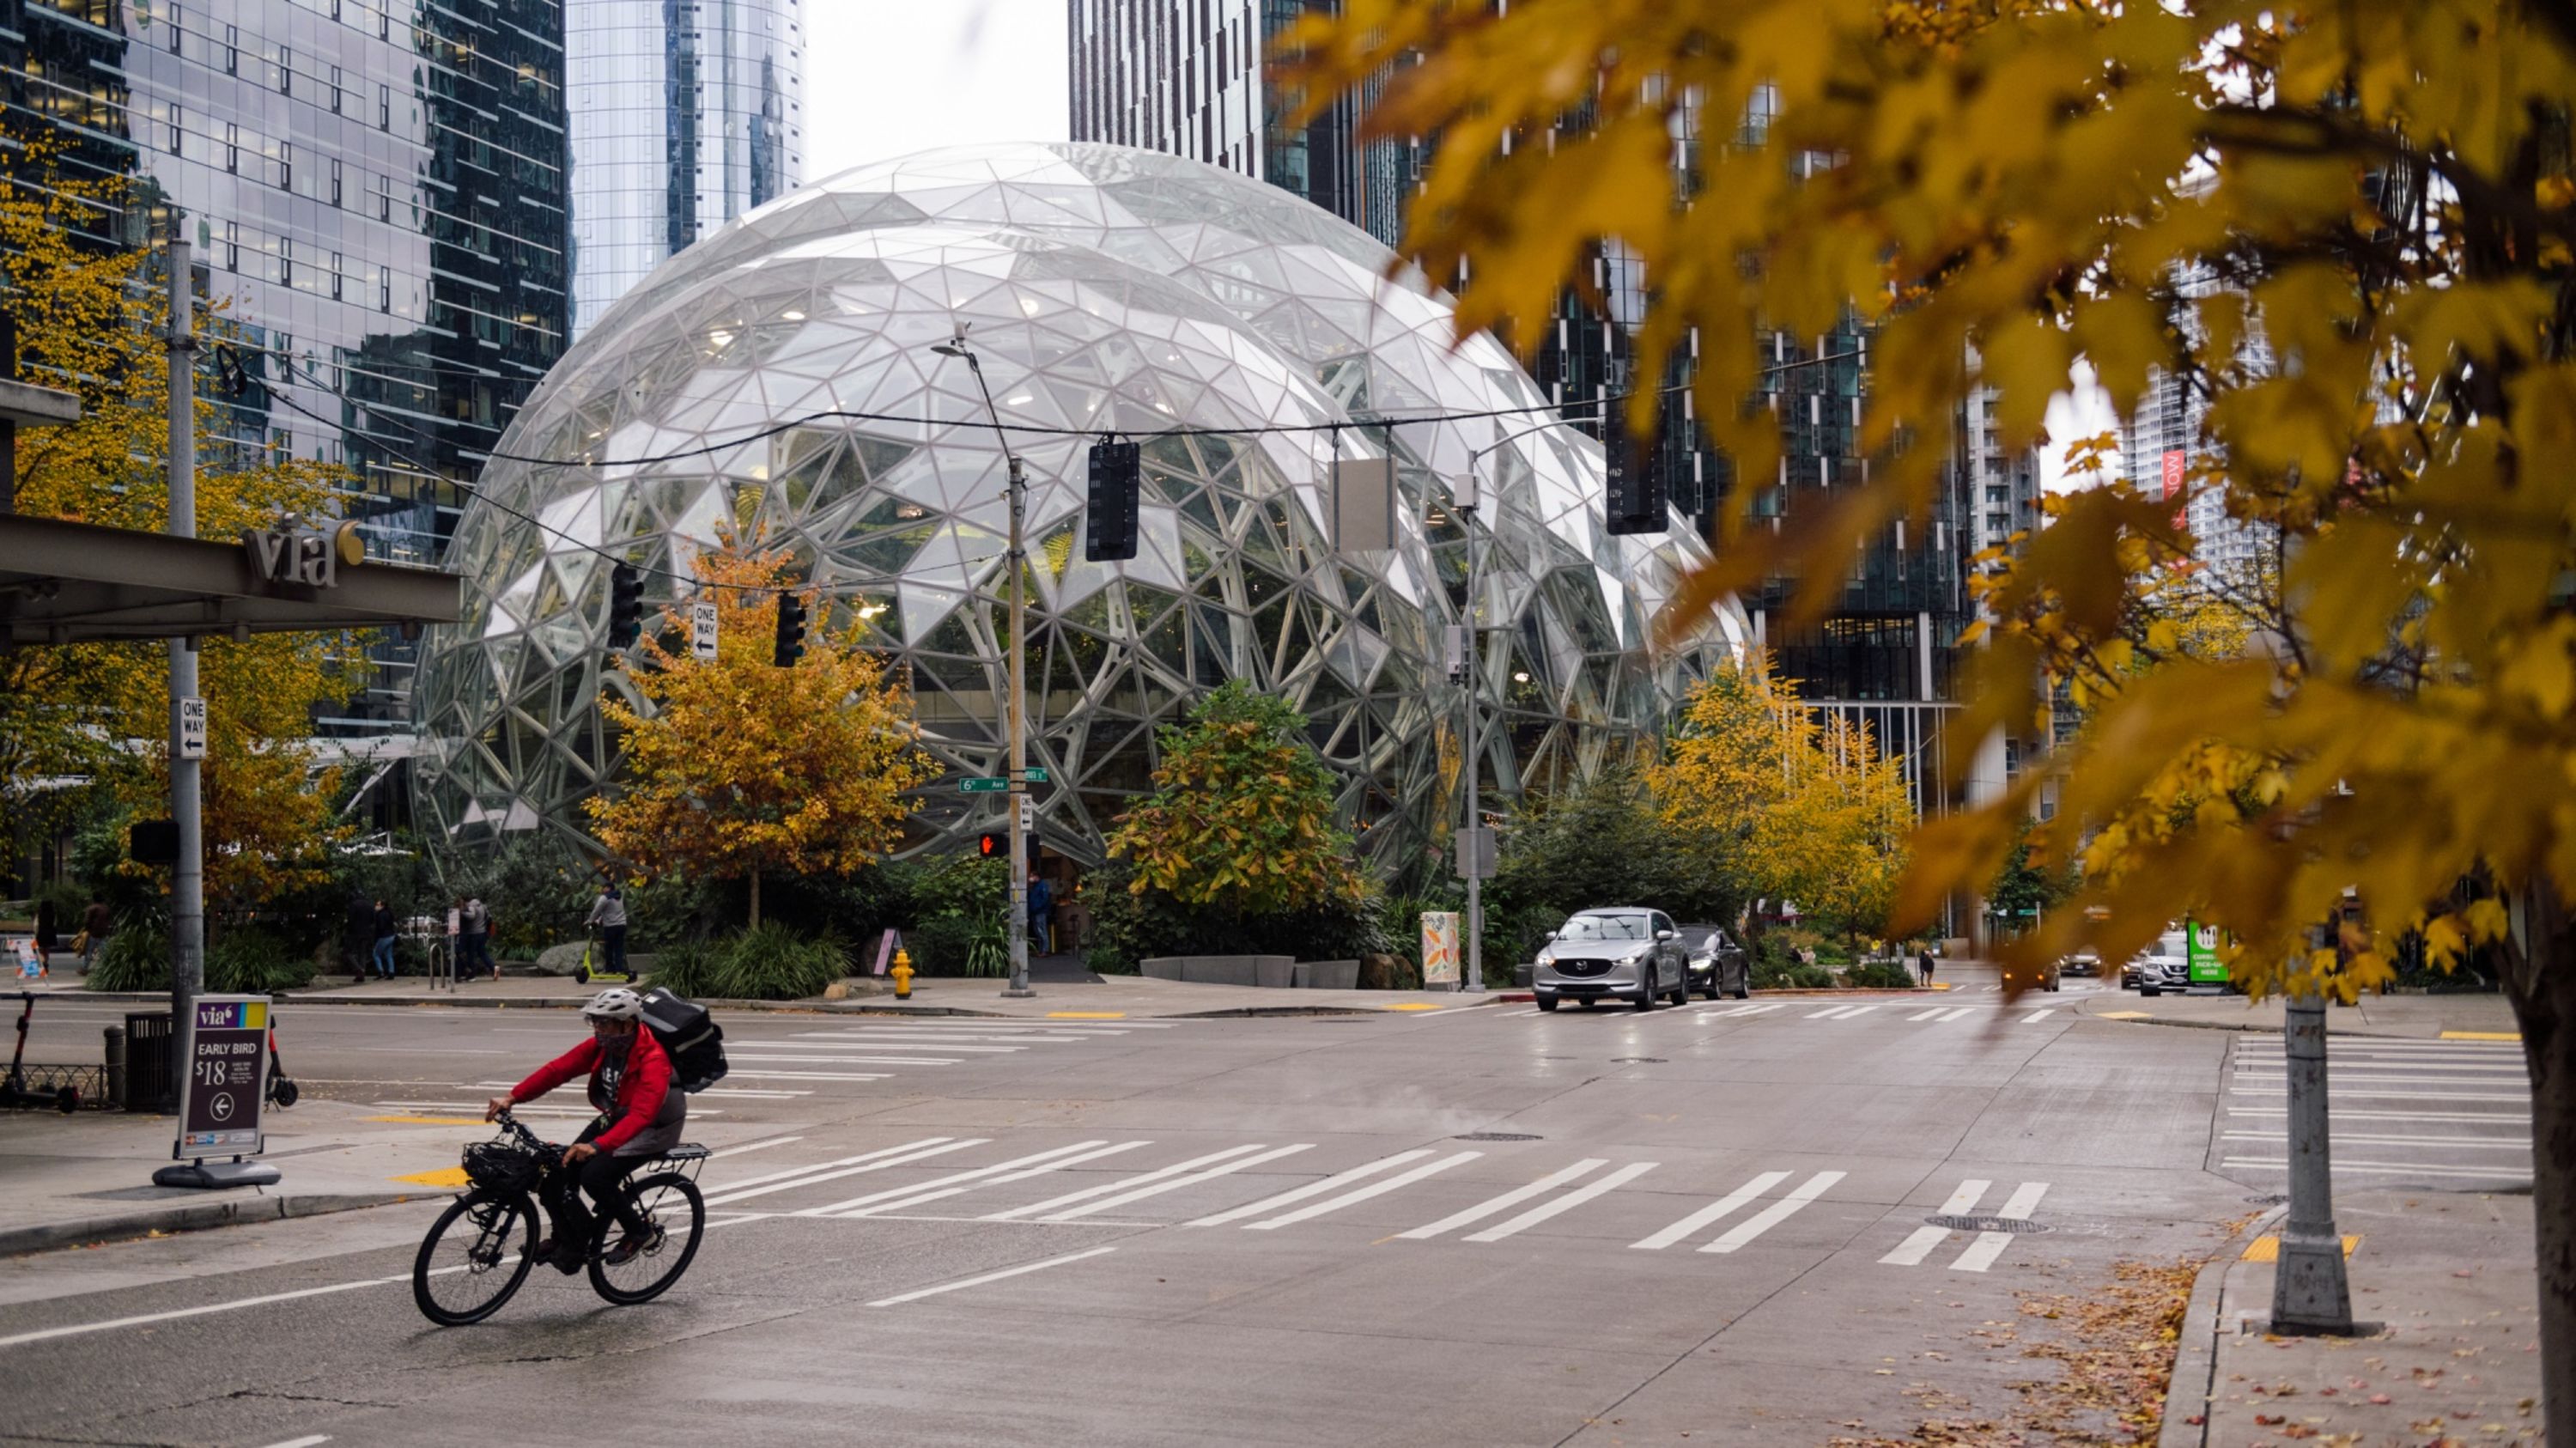 Amazon’s Seattle headquarters feature distinctive spheres.